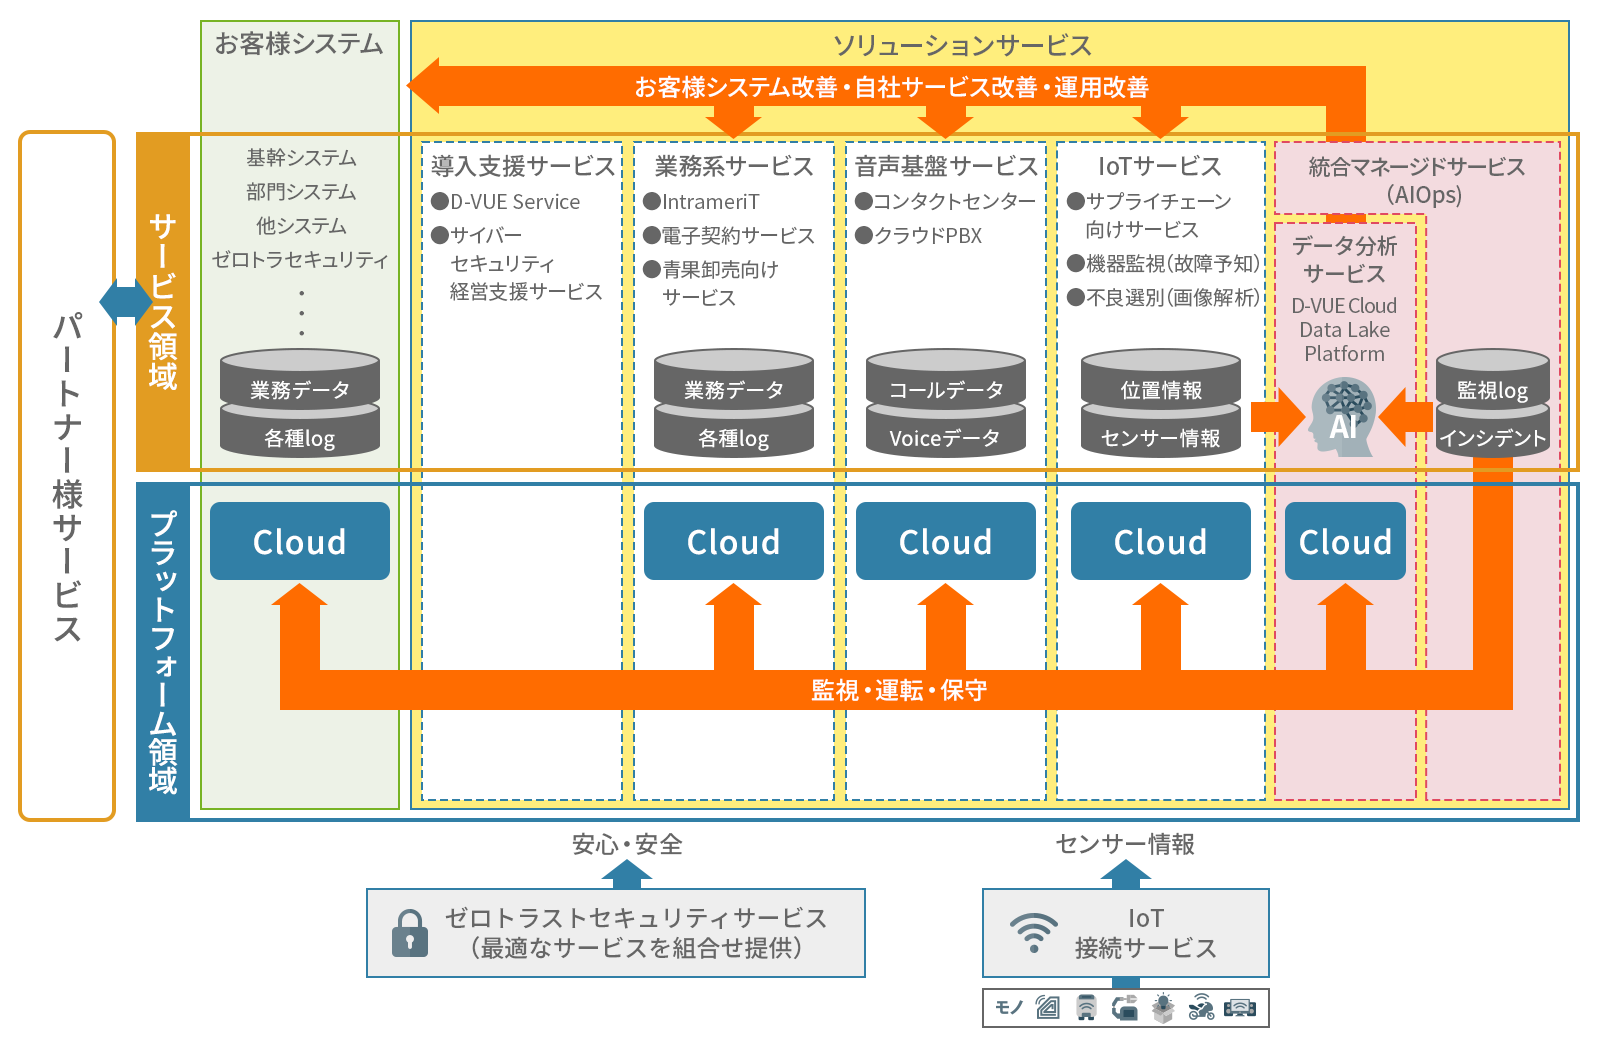 Total SolutionService Framework Solution system of Cloud Image